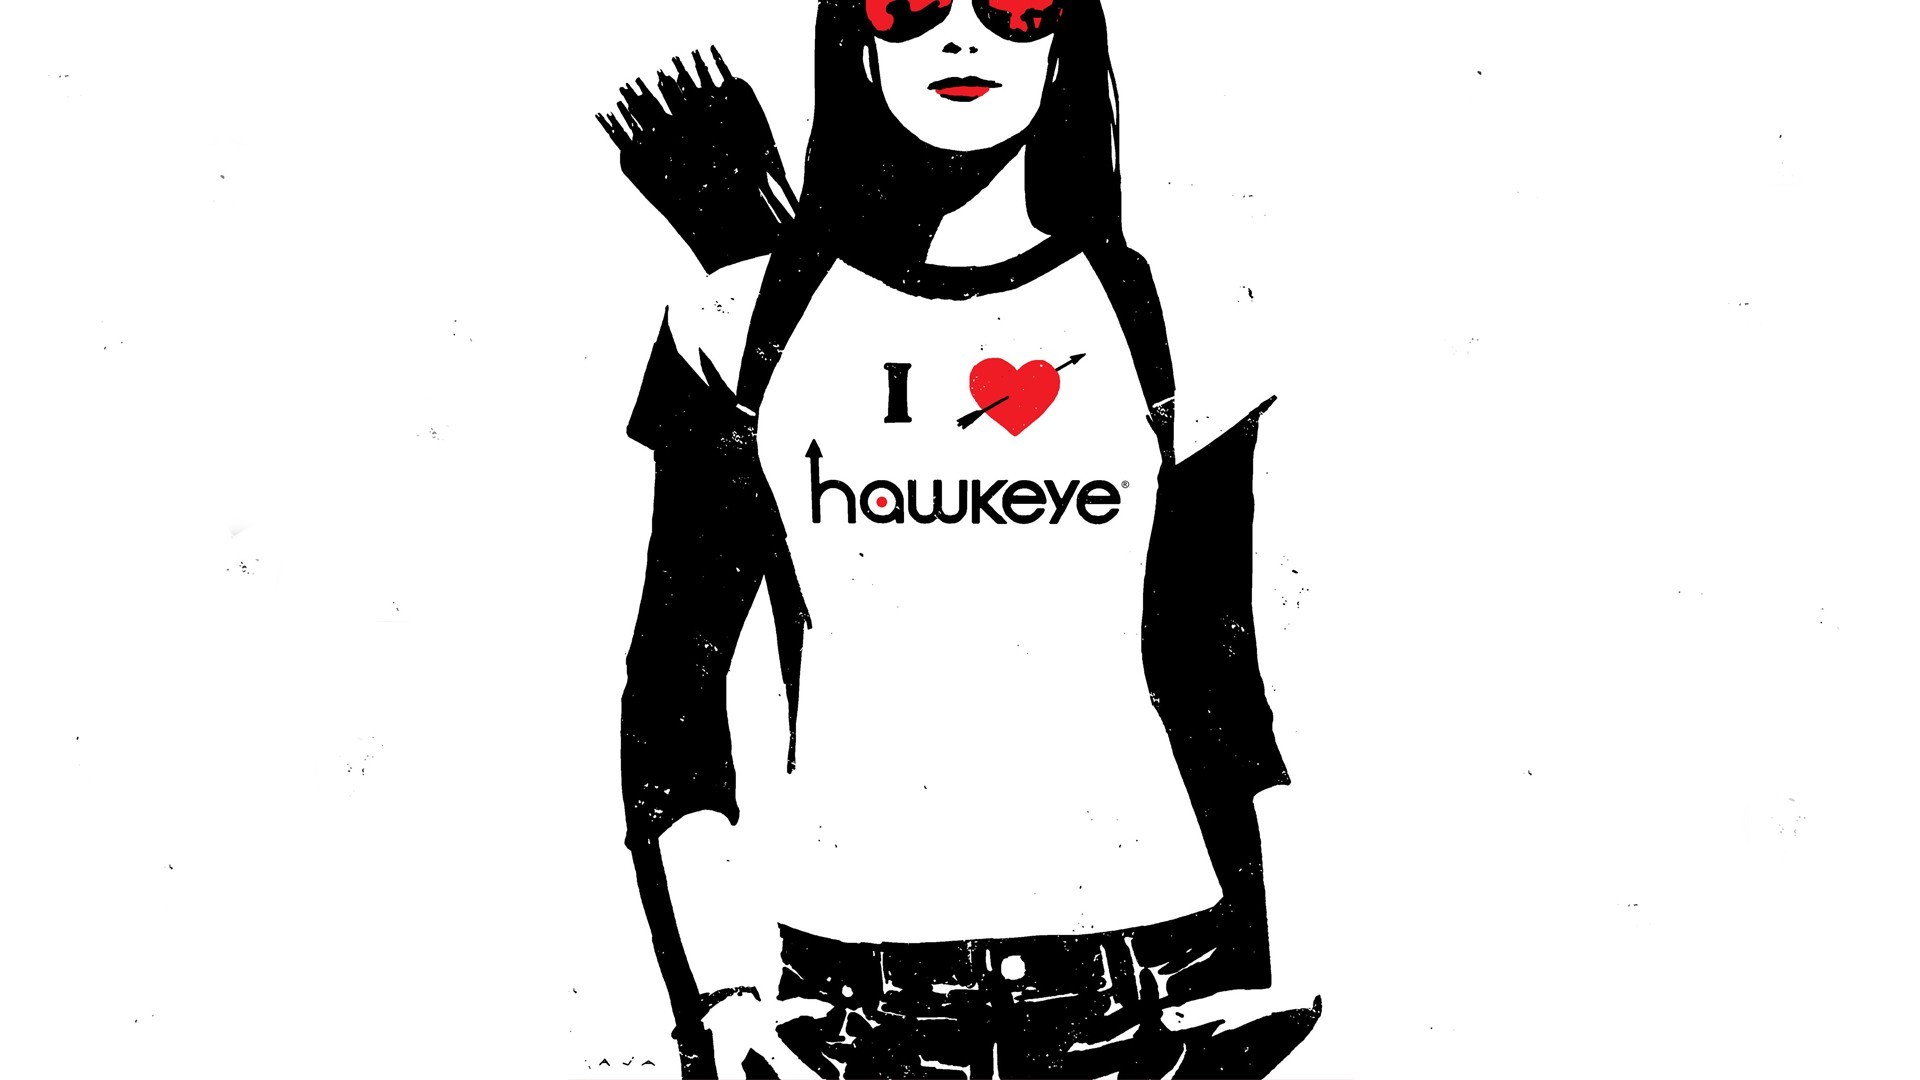 Hawkeye Hd Wallpaper Background Image 1920x1080 Id 408760 Wallpaper Abyss 1920x1080